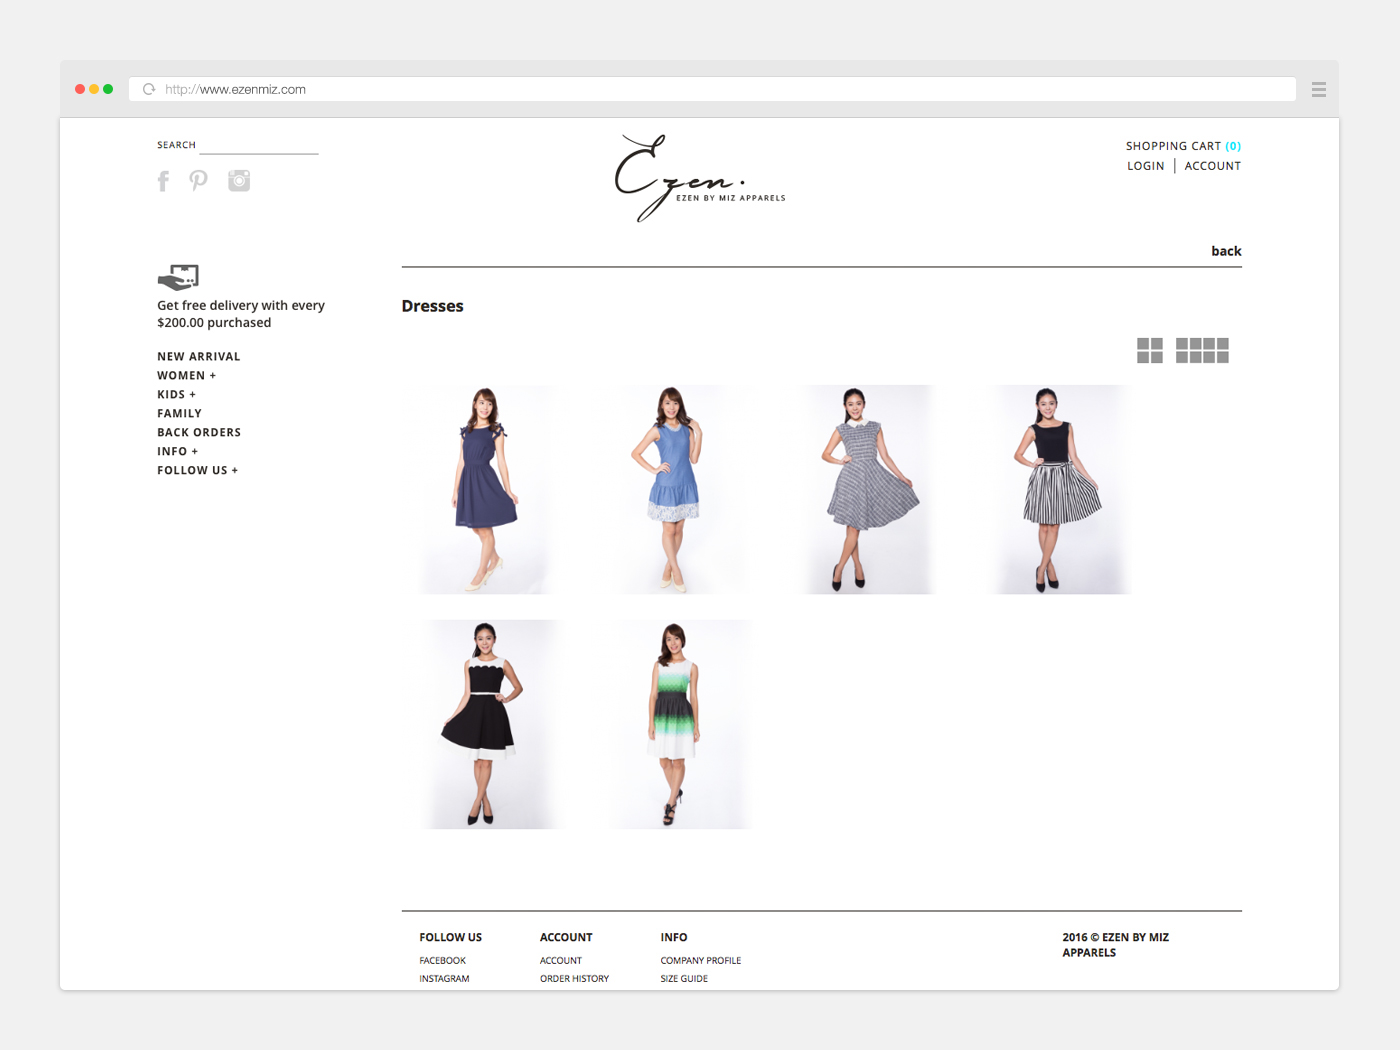 art direction brand creative fashion business wear b2c photo model Ecommerce Web Responsive graphic design Korea singapore